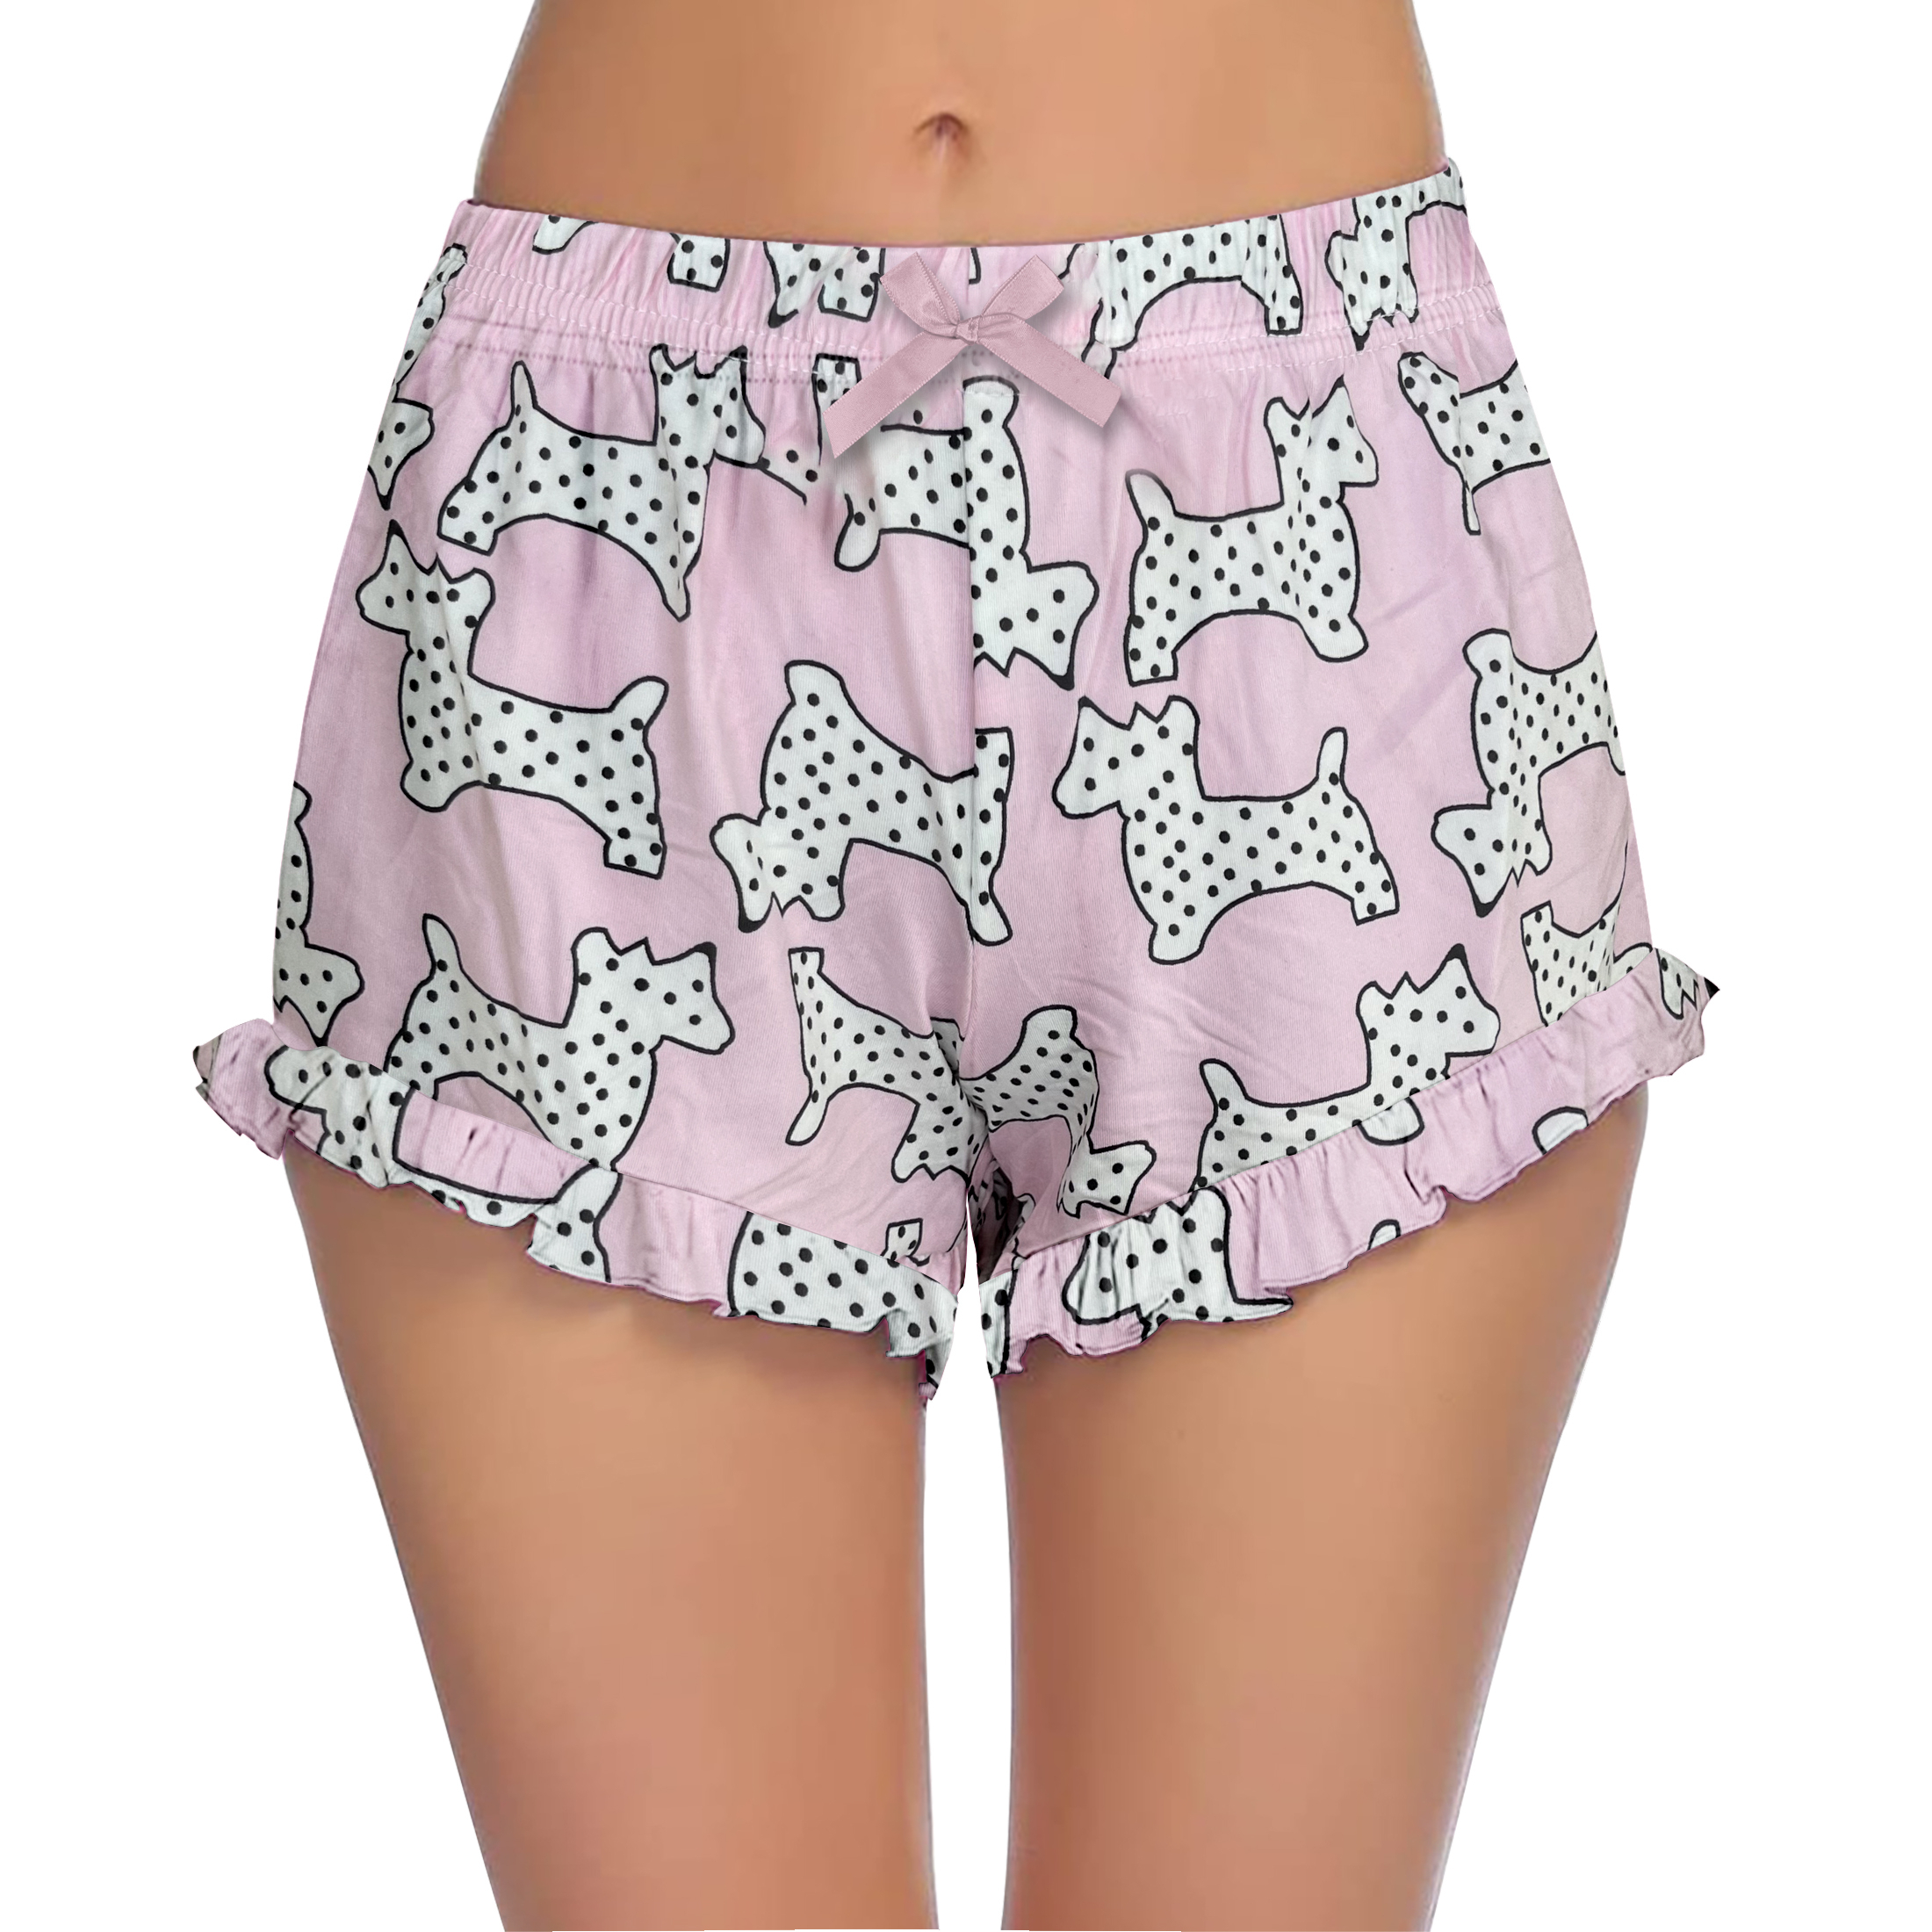 Women's Soft Printed Pajama Shorts W/ Ruffled Hem For Sleepwear - Large